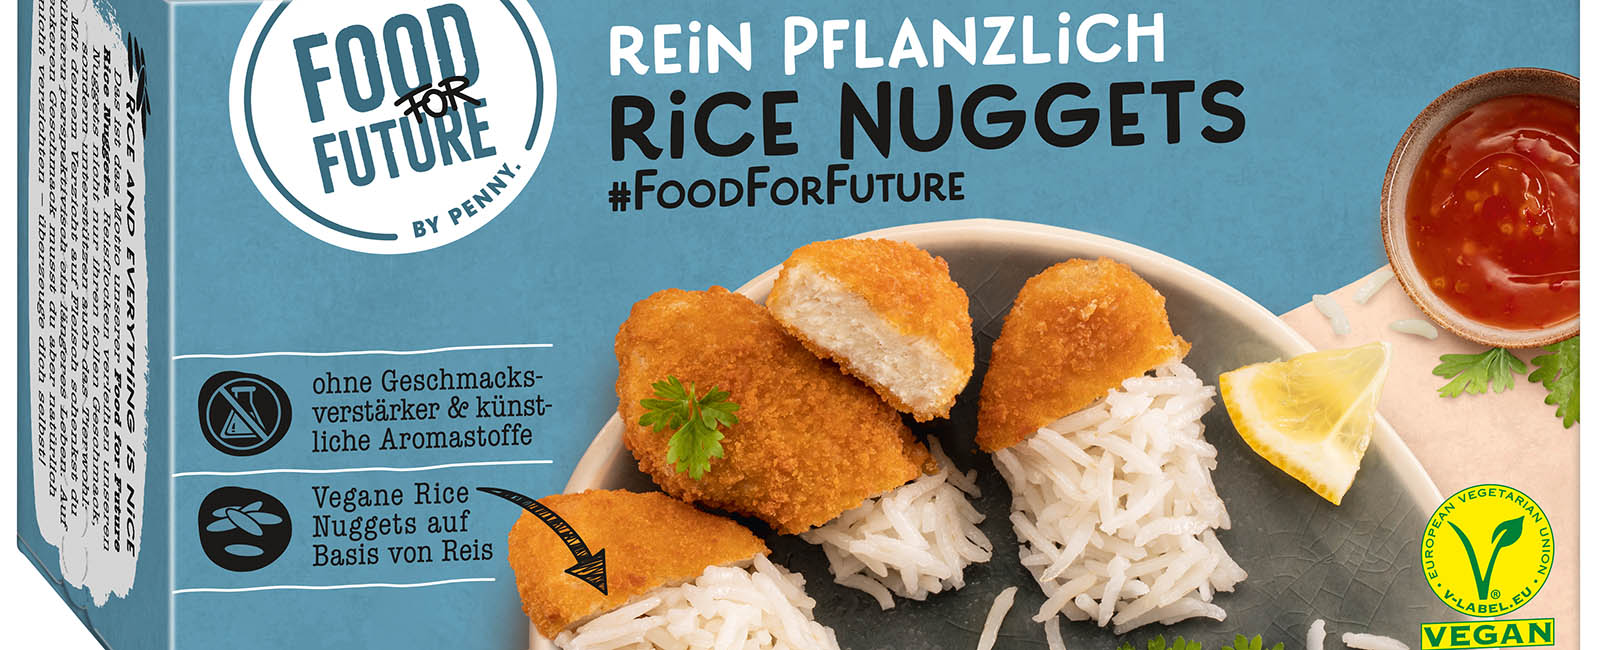 Food for Future: Penny launcht neue vegane Eigenmarke